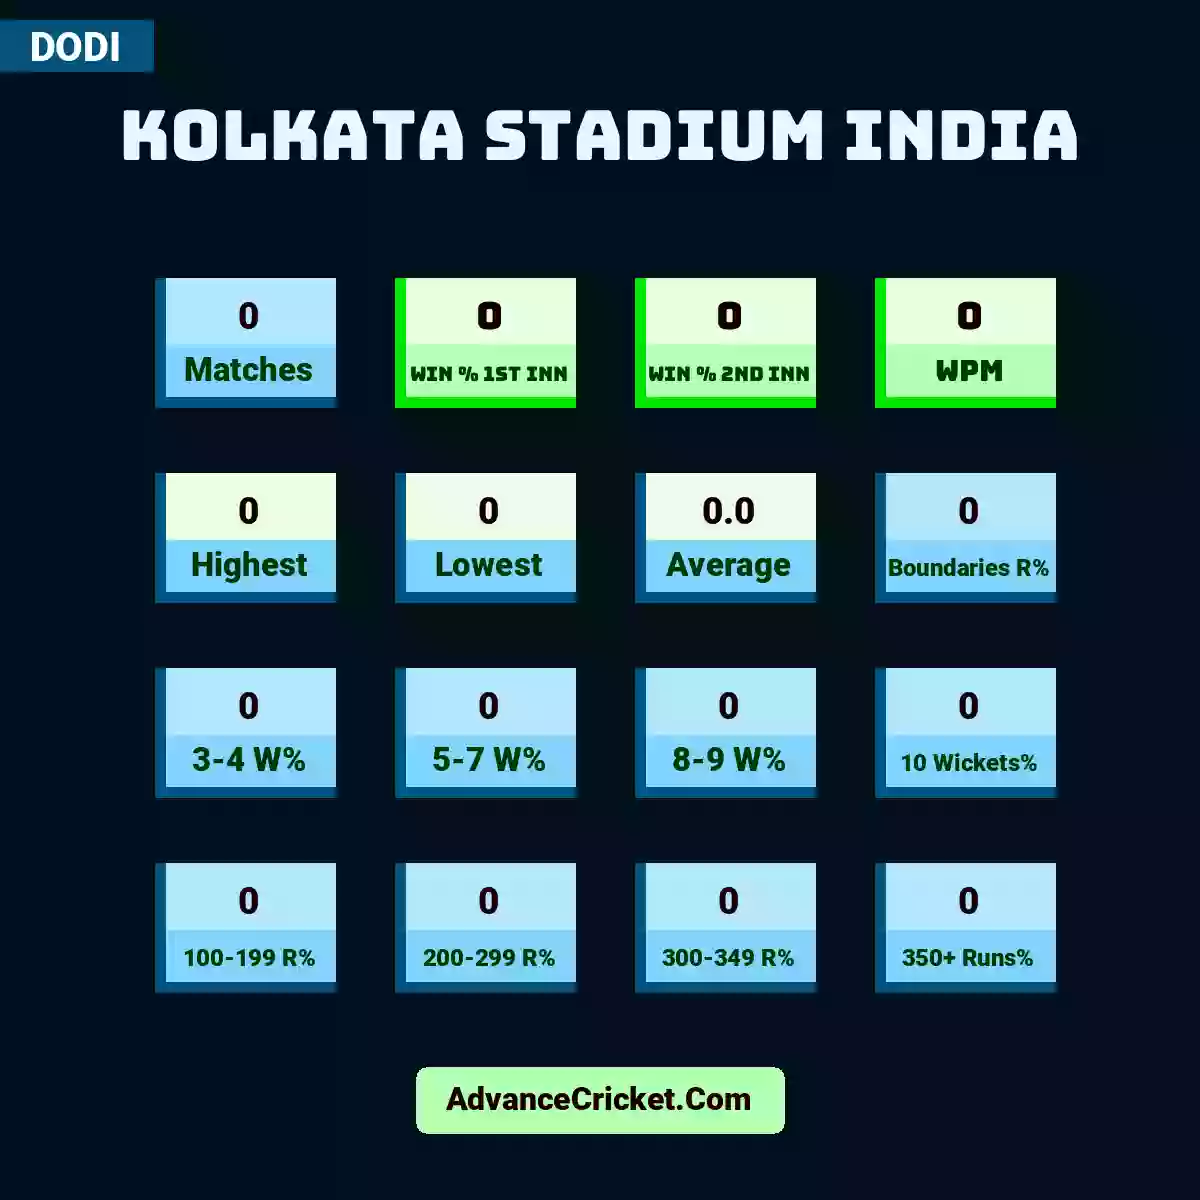 Image showing Kolkata Stadium India with Matches: 0, Win % 1st Inn: 0, Win % 2nd Inn: 0, WPM: 0, Highest: 0, Lowest: 0, Average: 0.0, Boundaries R%: 0, 3-4 W%: 0, 5-7 W%: 0, 8-9 W%: 0, 10 Wickets%: 0, 100-199 R%: 0, 200-299 R%: 0, 300-349 R%: 0, 350+ Runs%: 0.